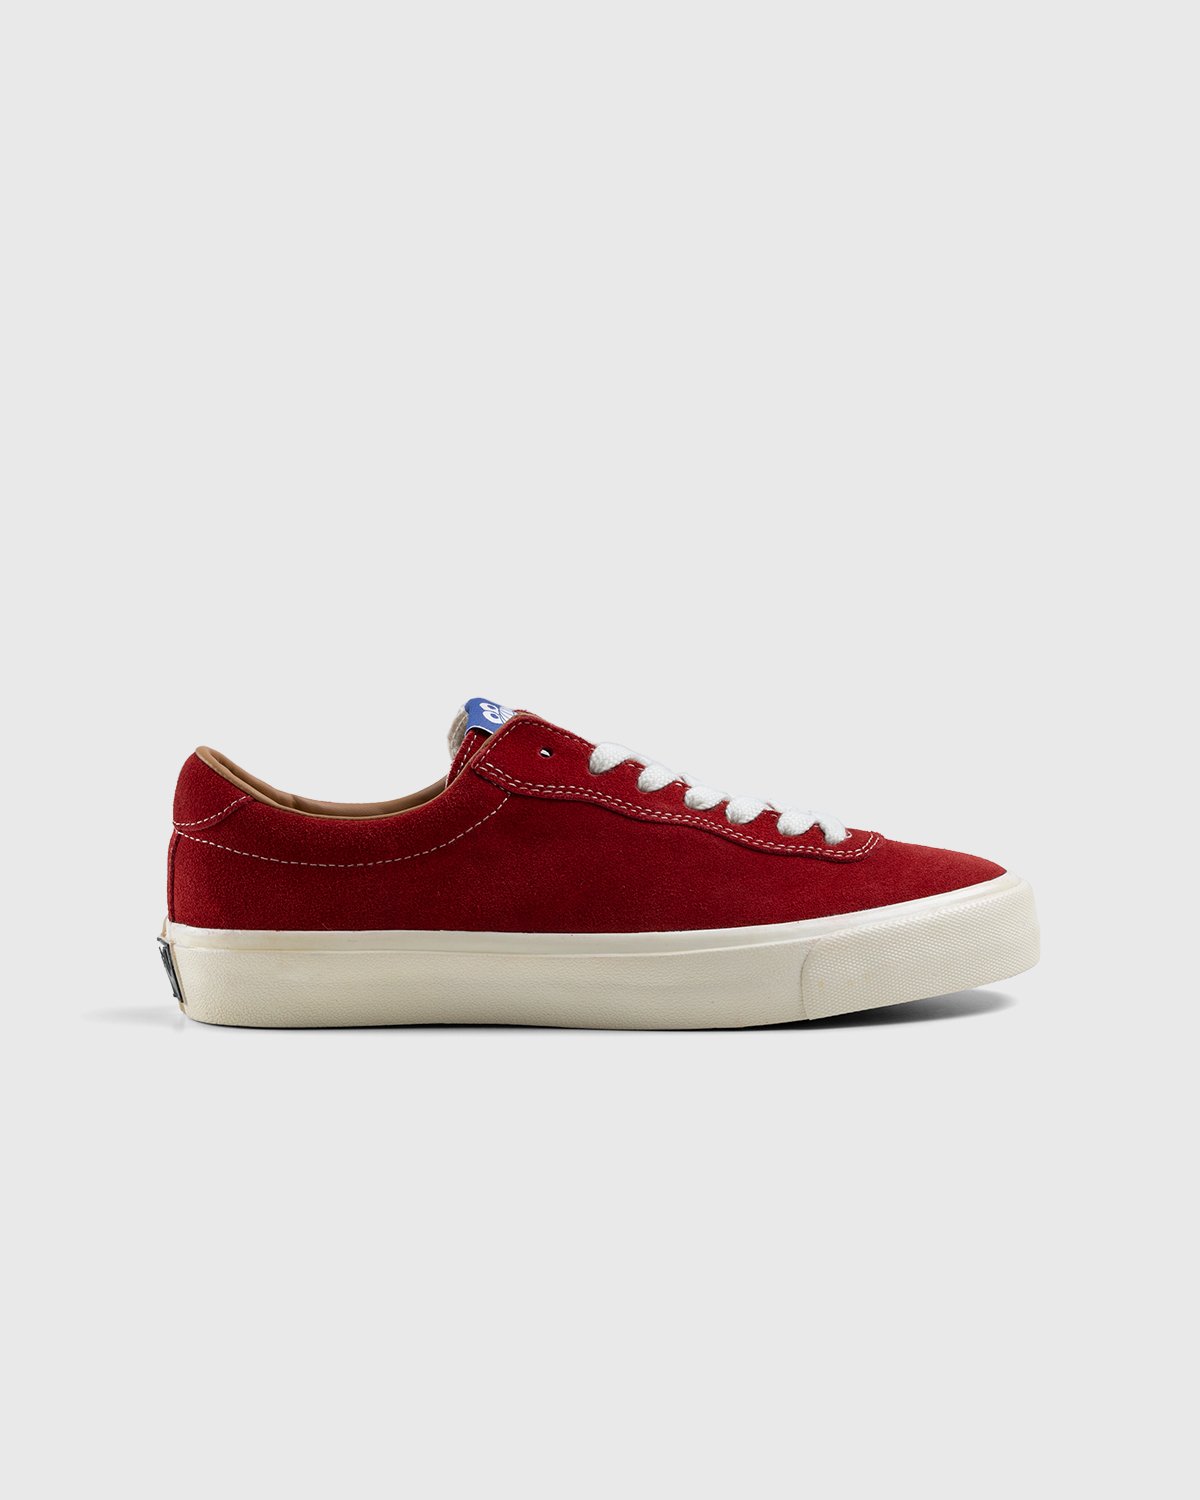 Last Resort AB - VM001 Lo Suede Old Red/White - Footwear - Red - Image 1